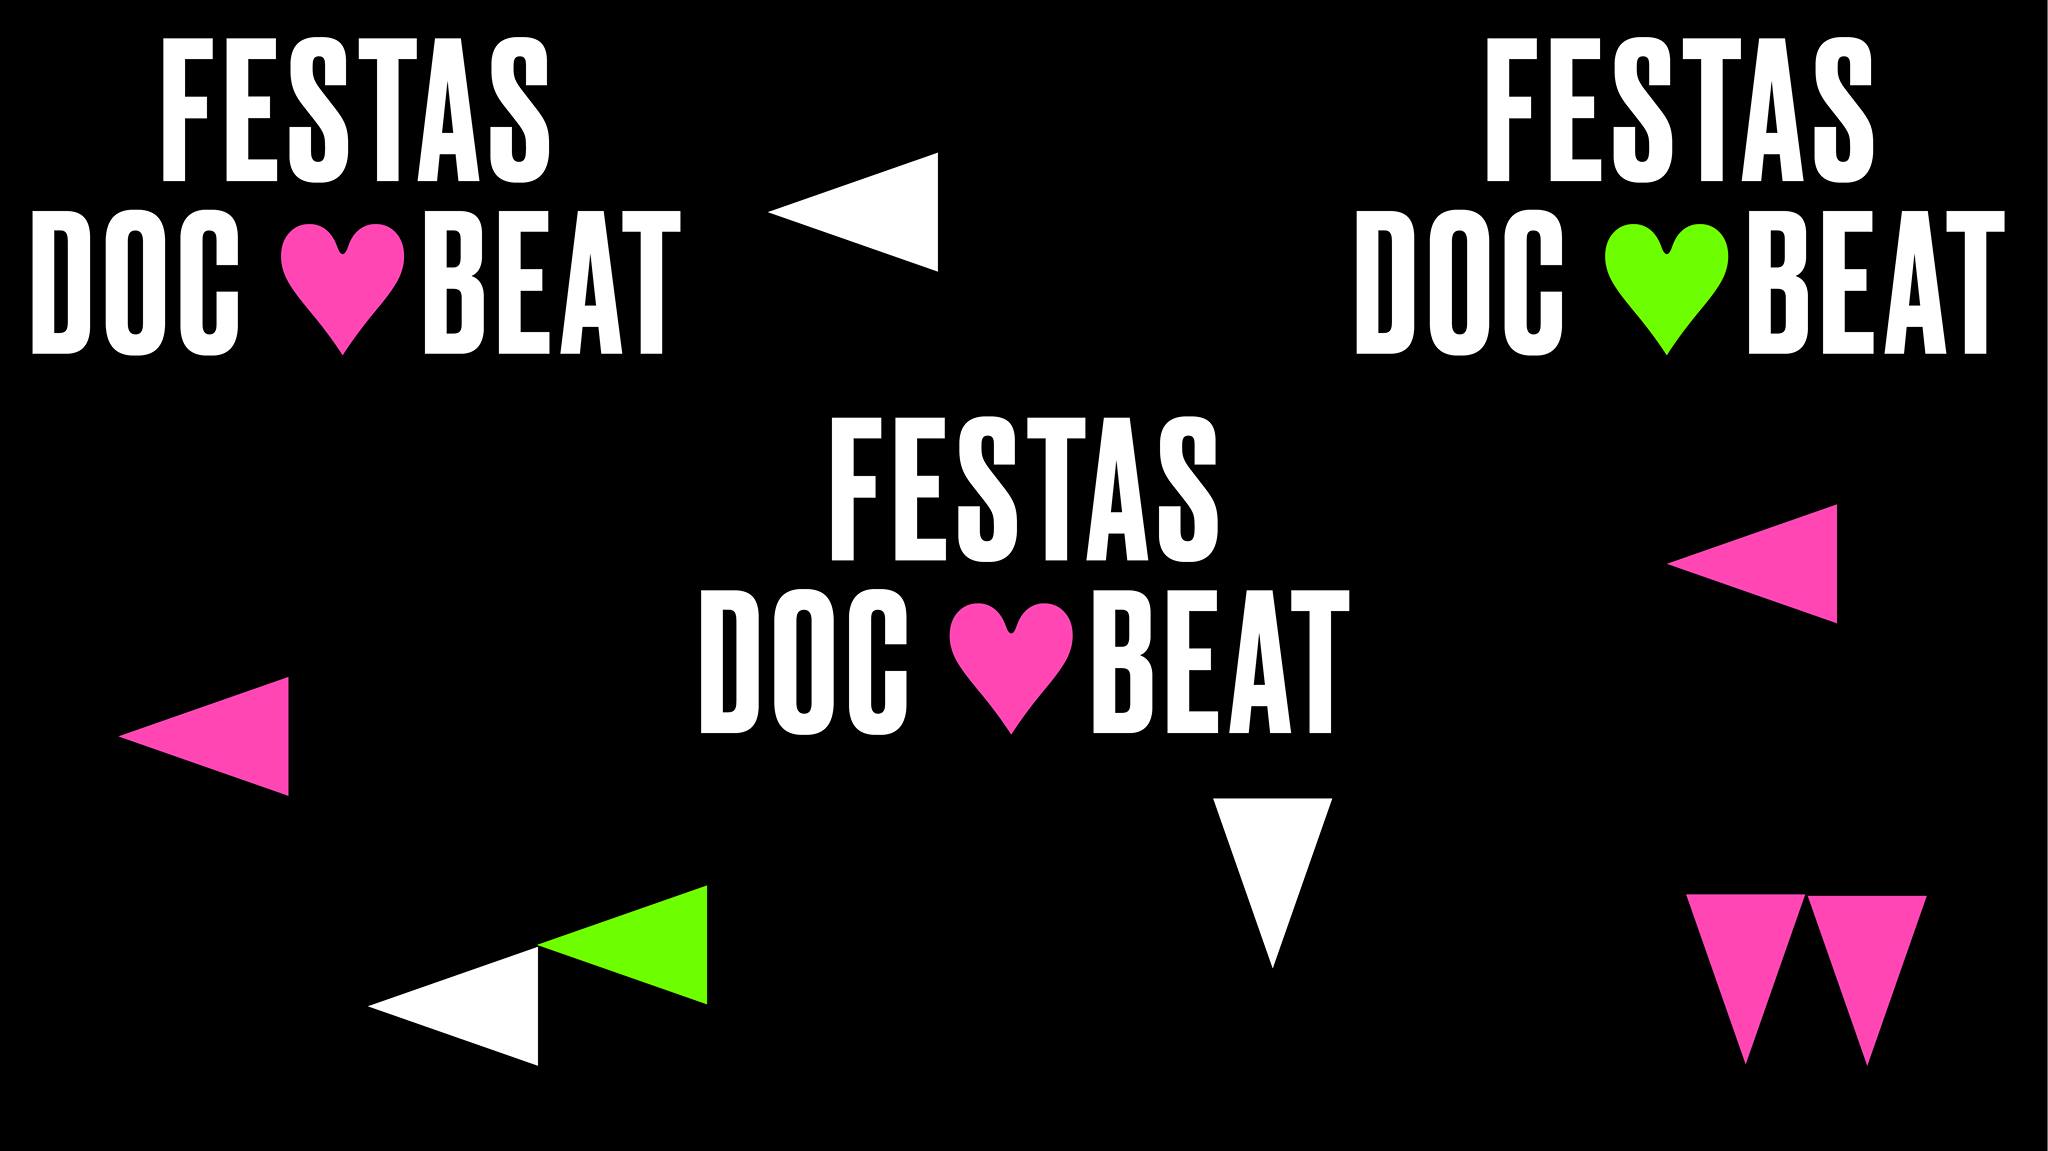 FESTAS DOC BEAT